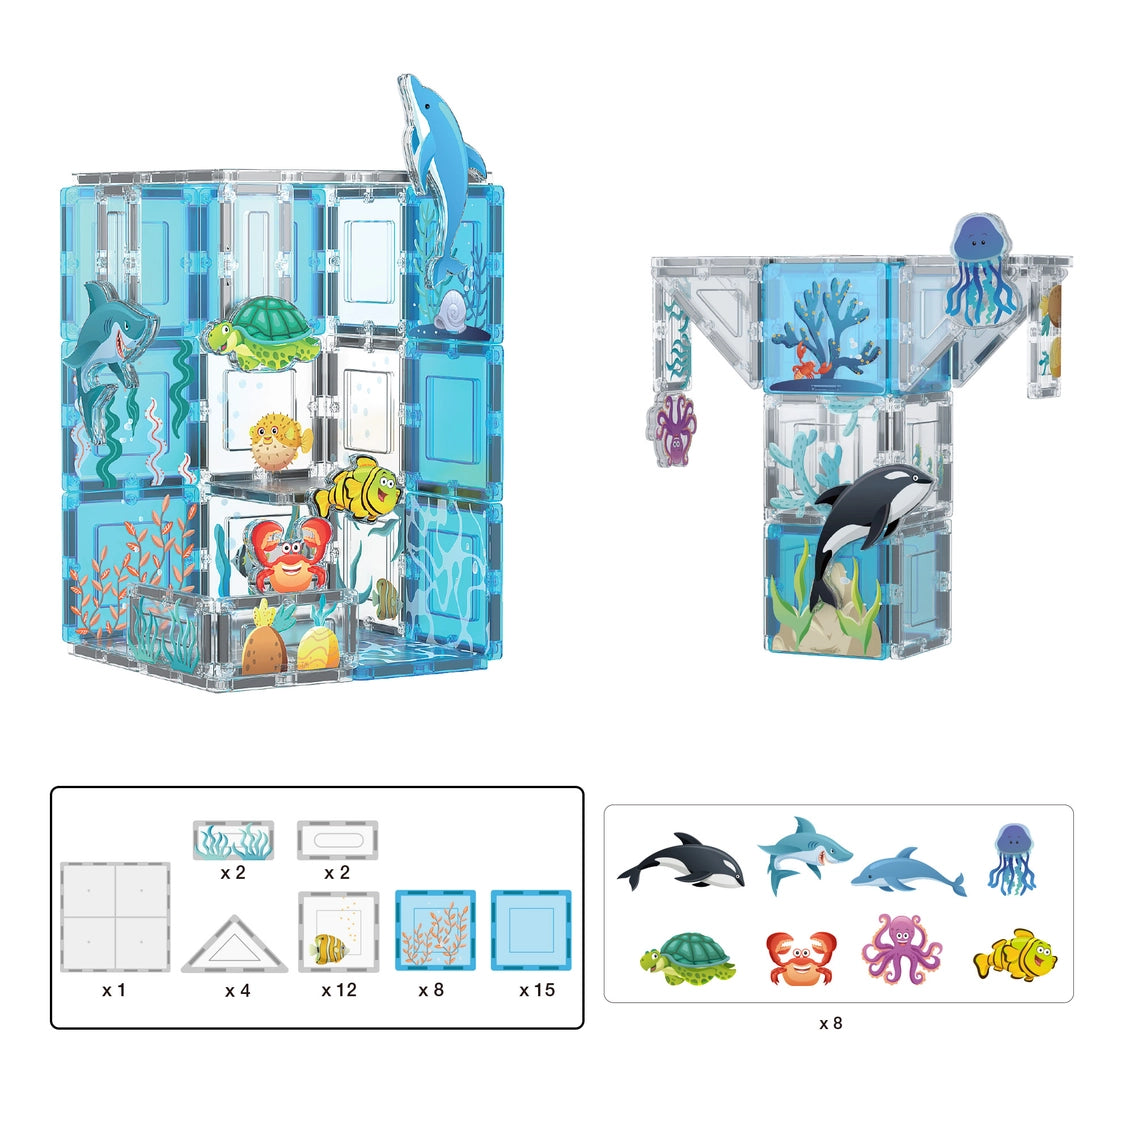 Picasso Magnet Tile Playset Aquarium with Sea Life Figures